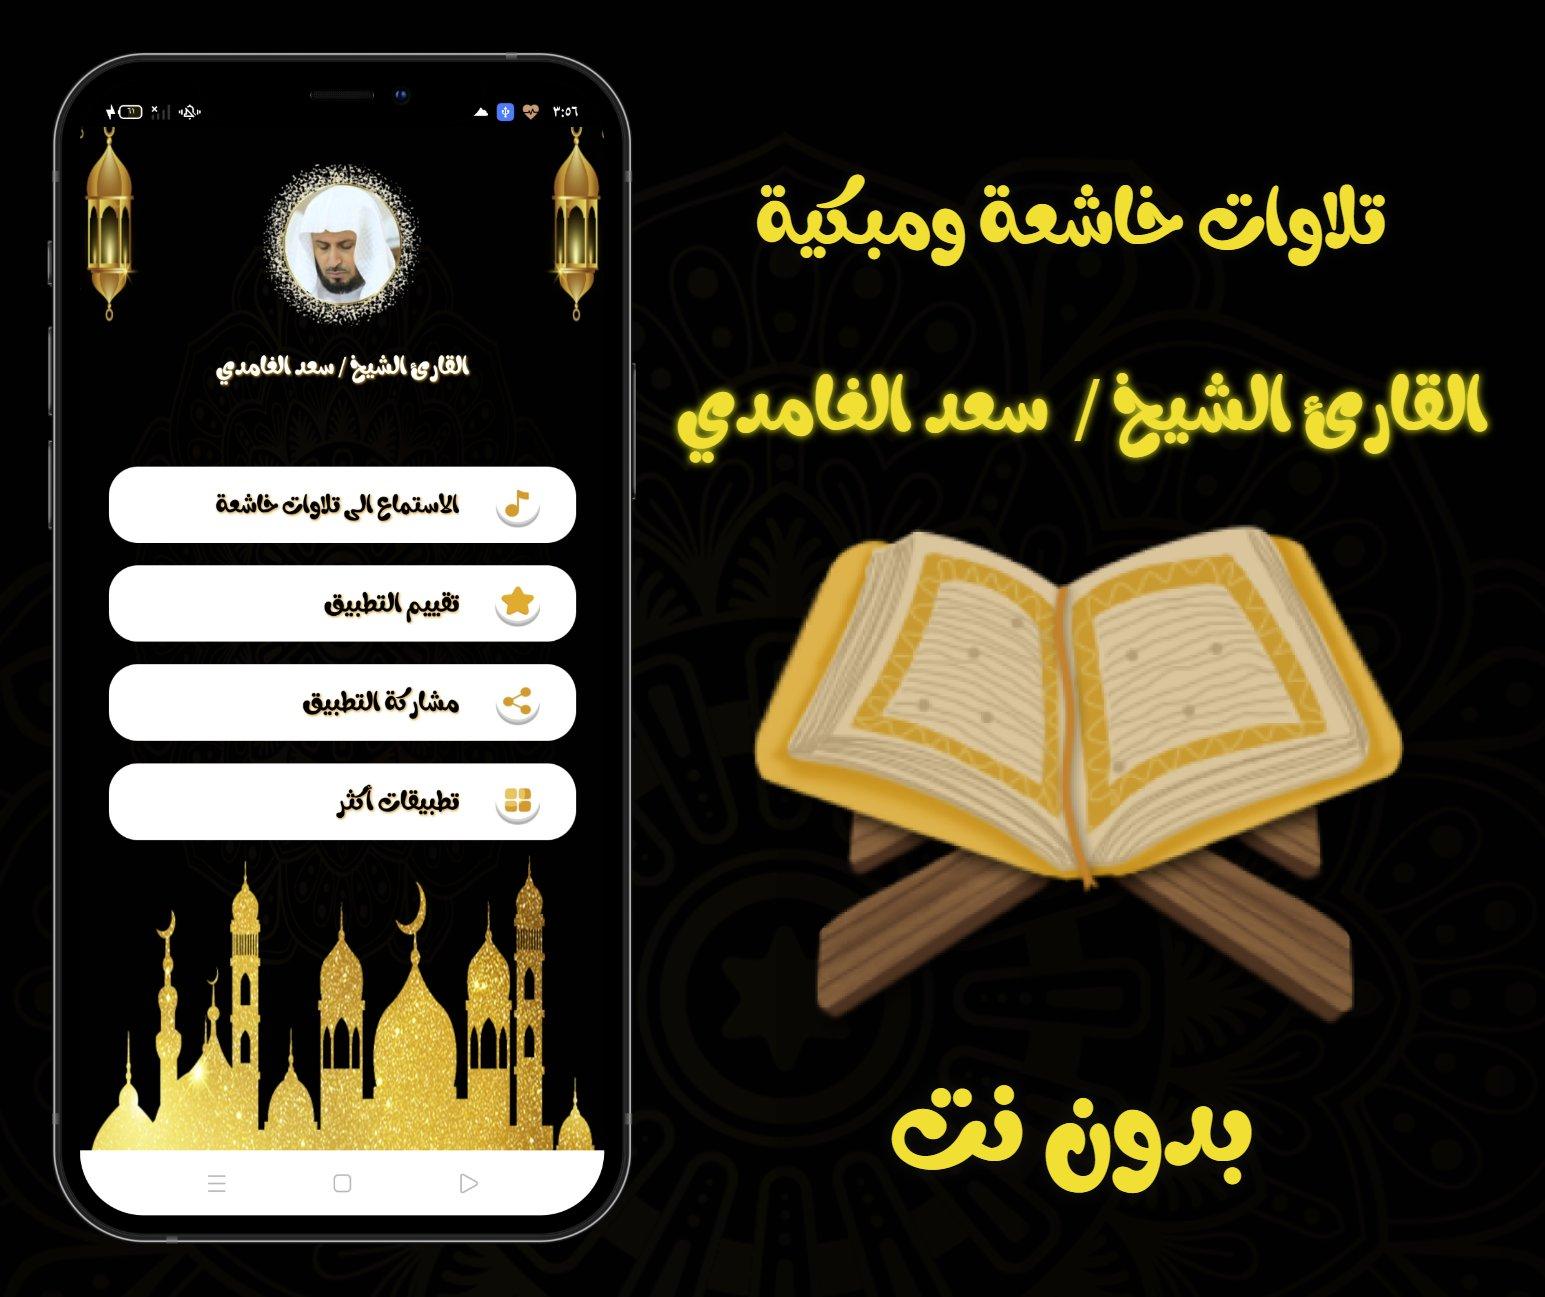 سعد الغامدى - تلاوات خاشعة APK for Android Download